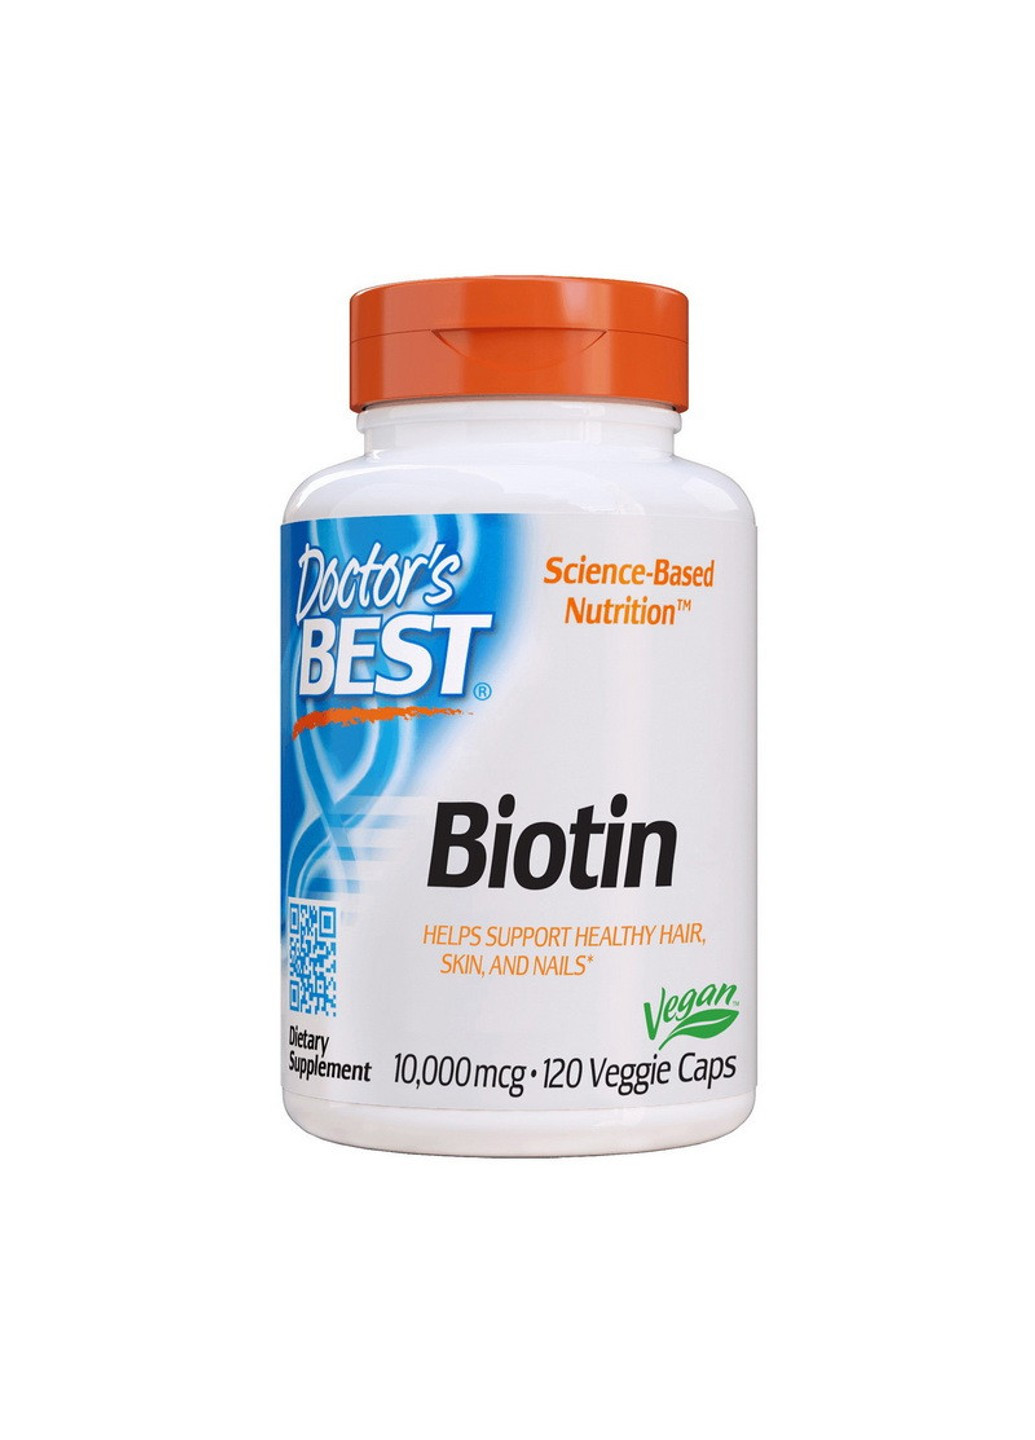 Біотин Biotin 10,000 mcg (120 капс) вітамін Б7 доктор бест Doctor's Best (255409367)